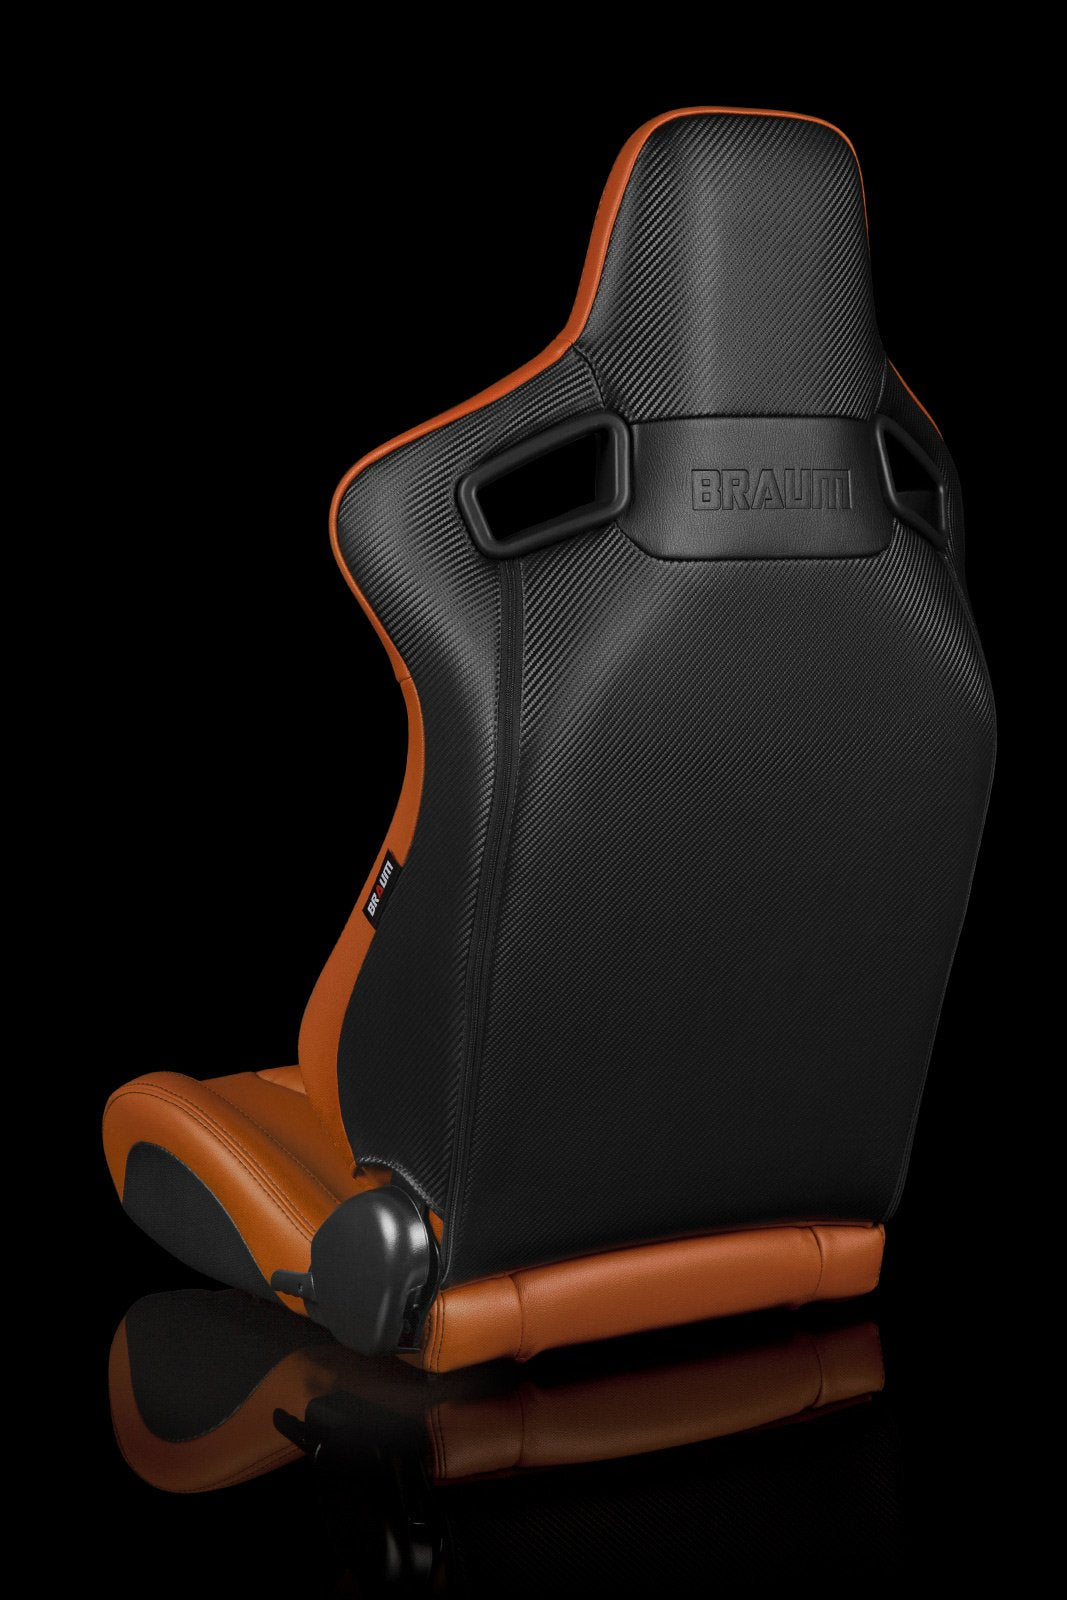 Braum Elite-X Series Sport Seats - British Tan Leatherette / Black Stitching (PAIR) - Lowered Lifestyle